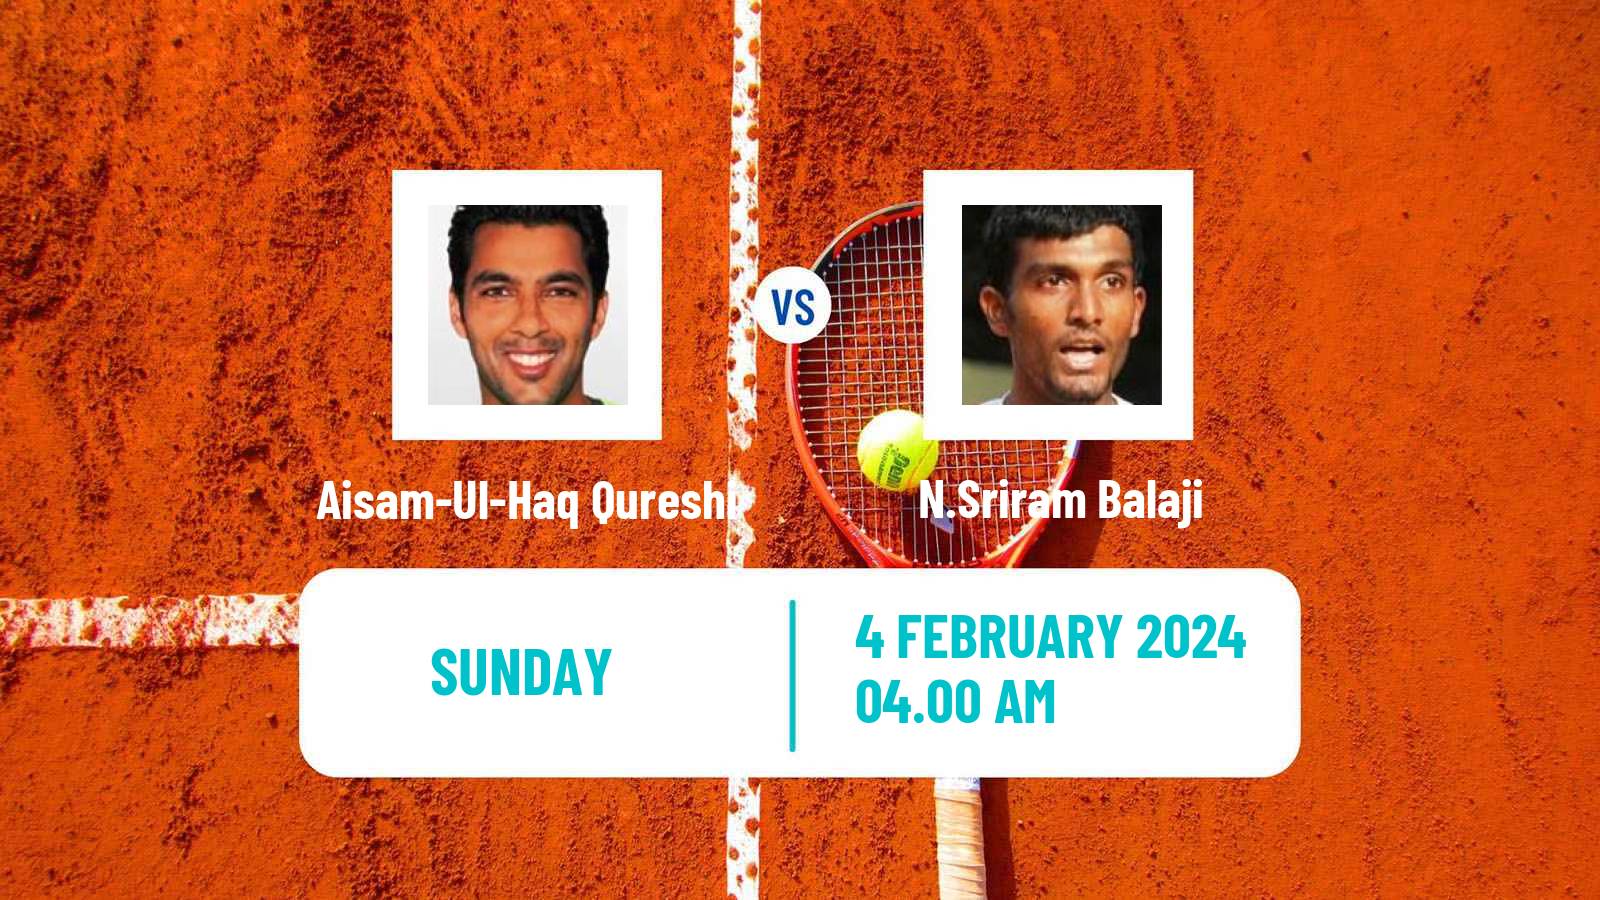 Tennis Davis Cup World Group I Aisam-Ul-Haq Qureshi - N.Sriram Balaji